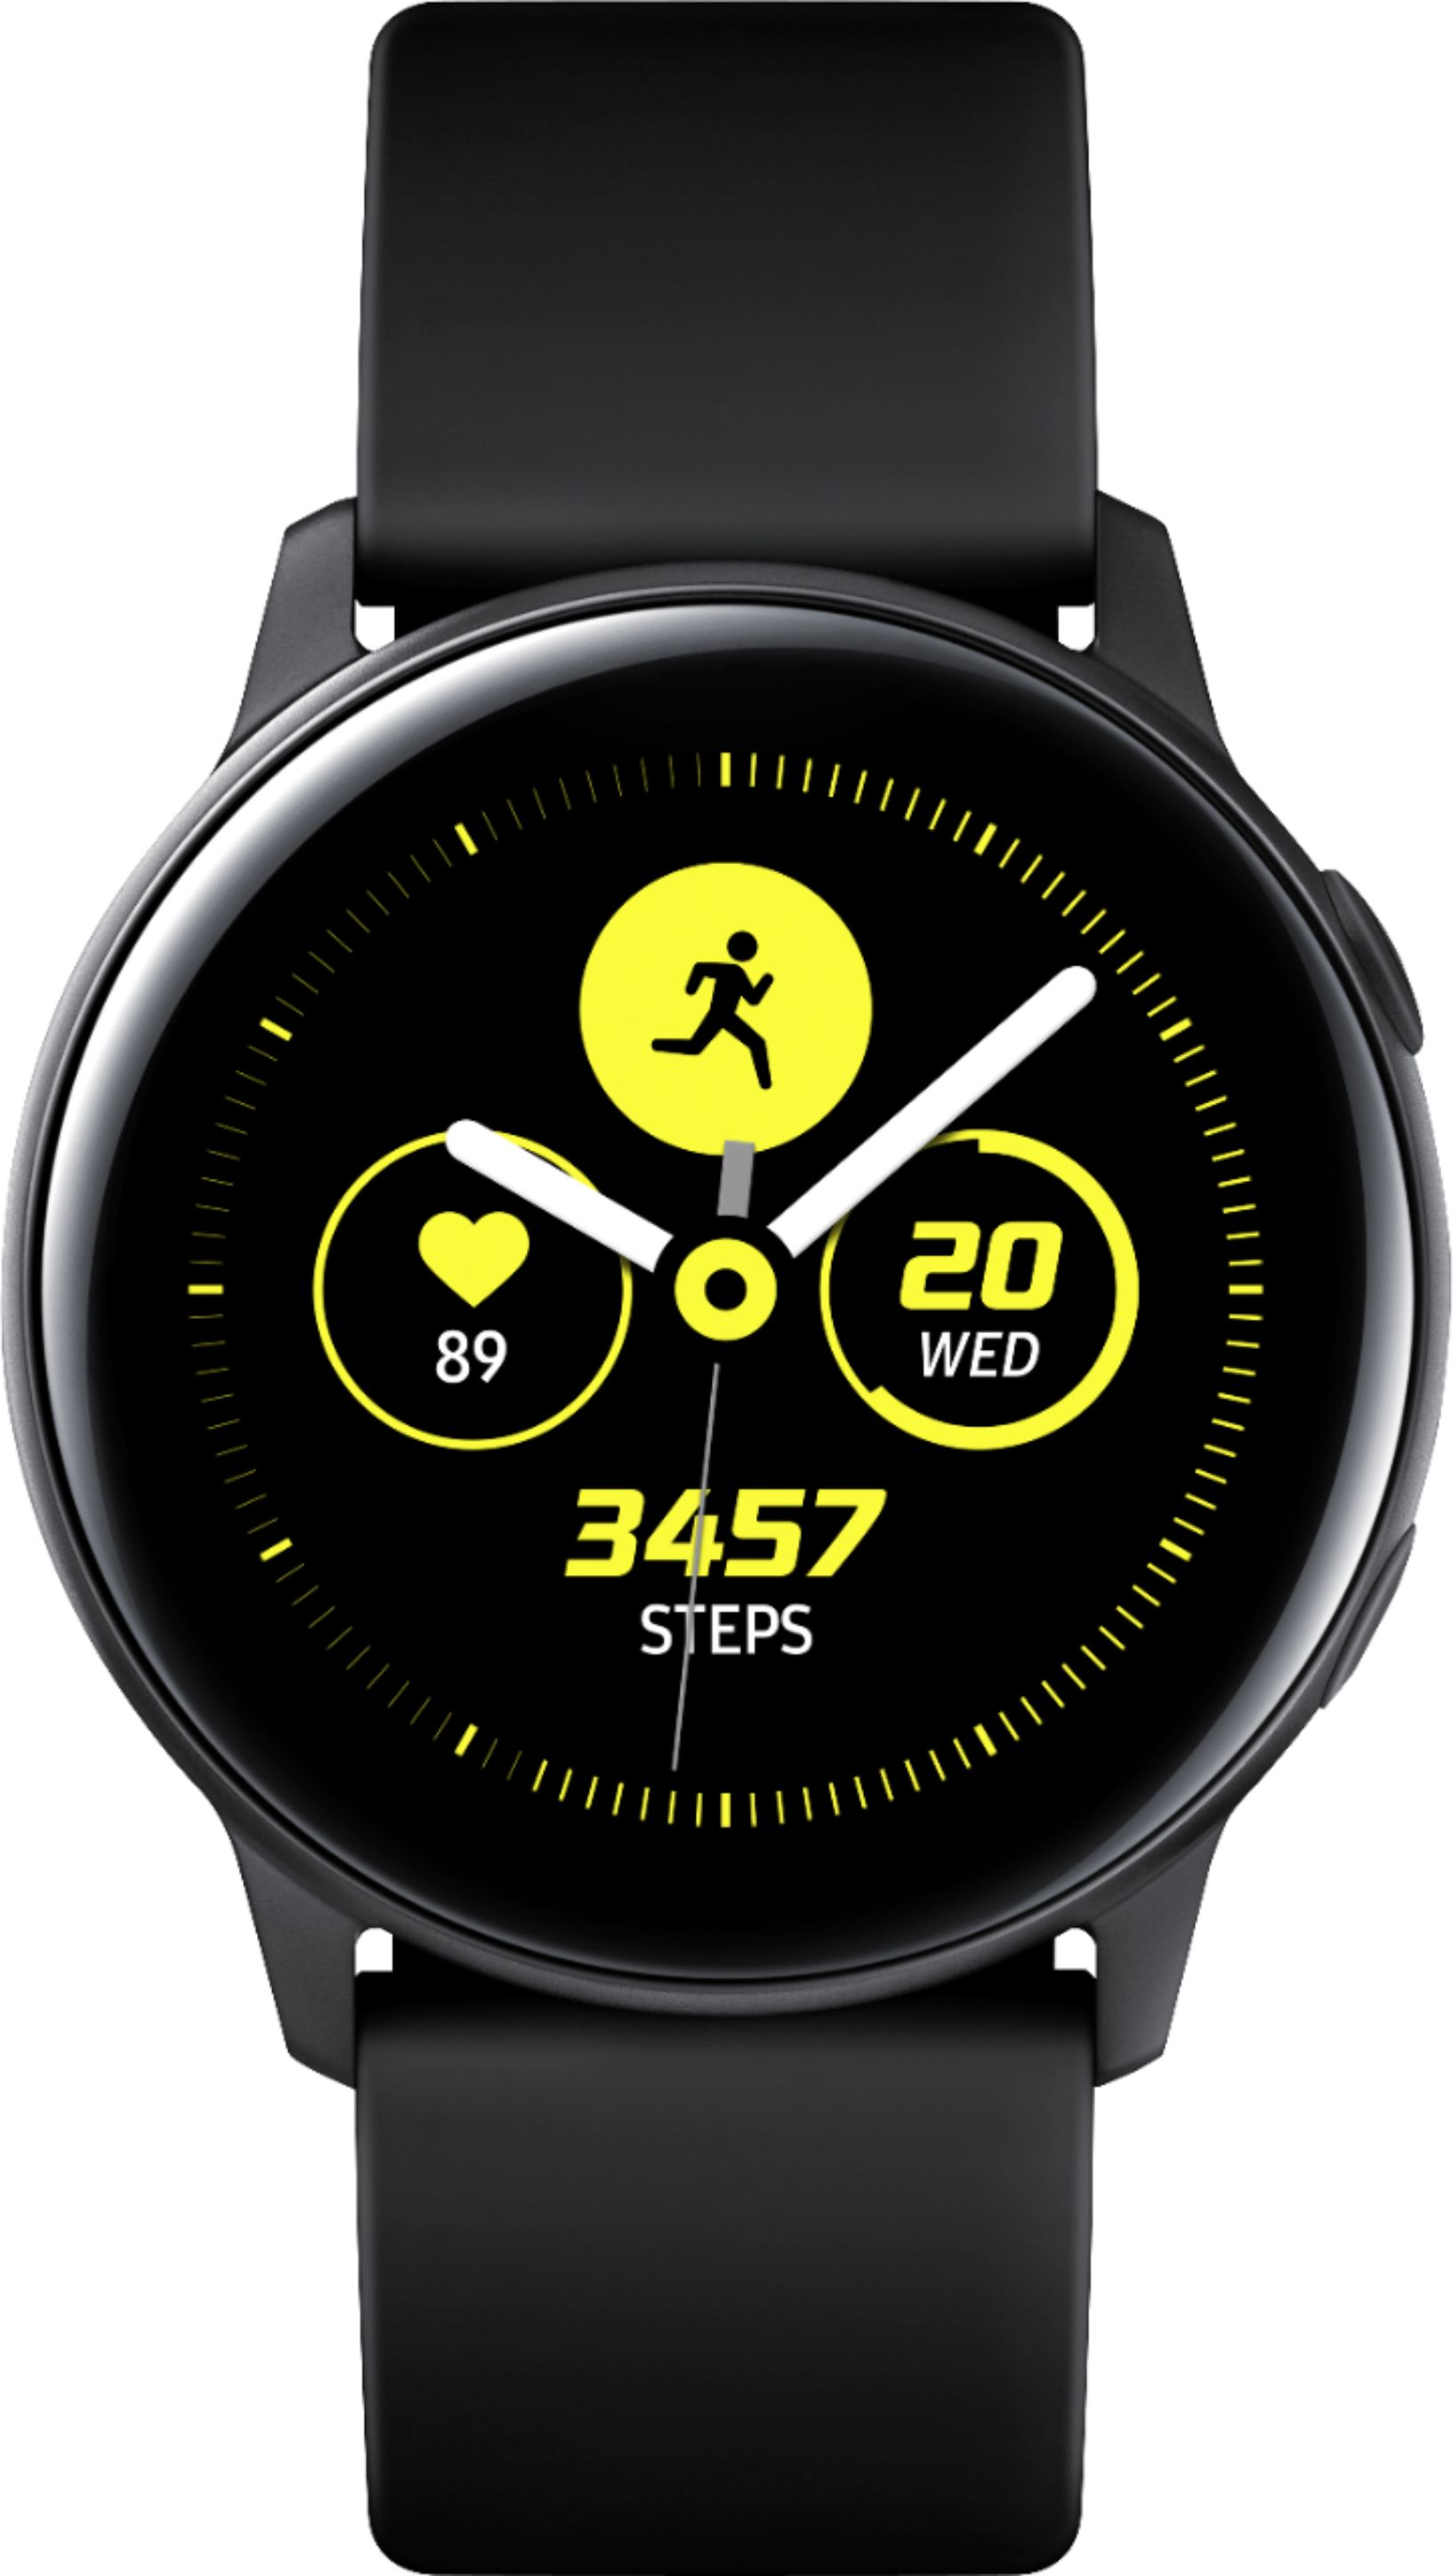 Samsung Geek Squad Certified Refurbished Galaxy Watch Active Smartwatch